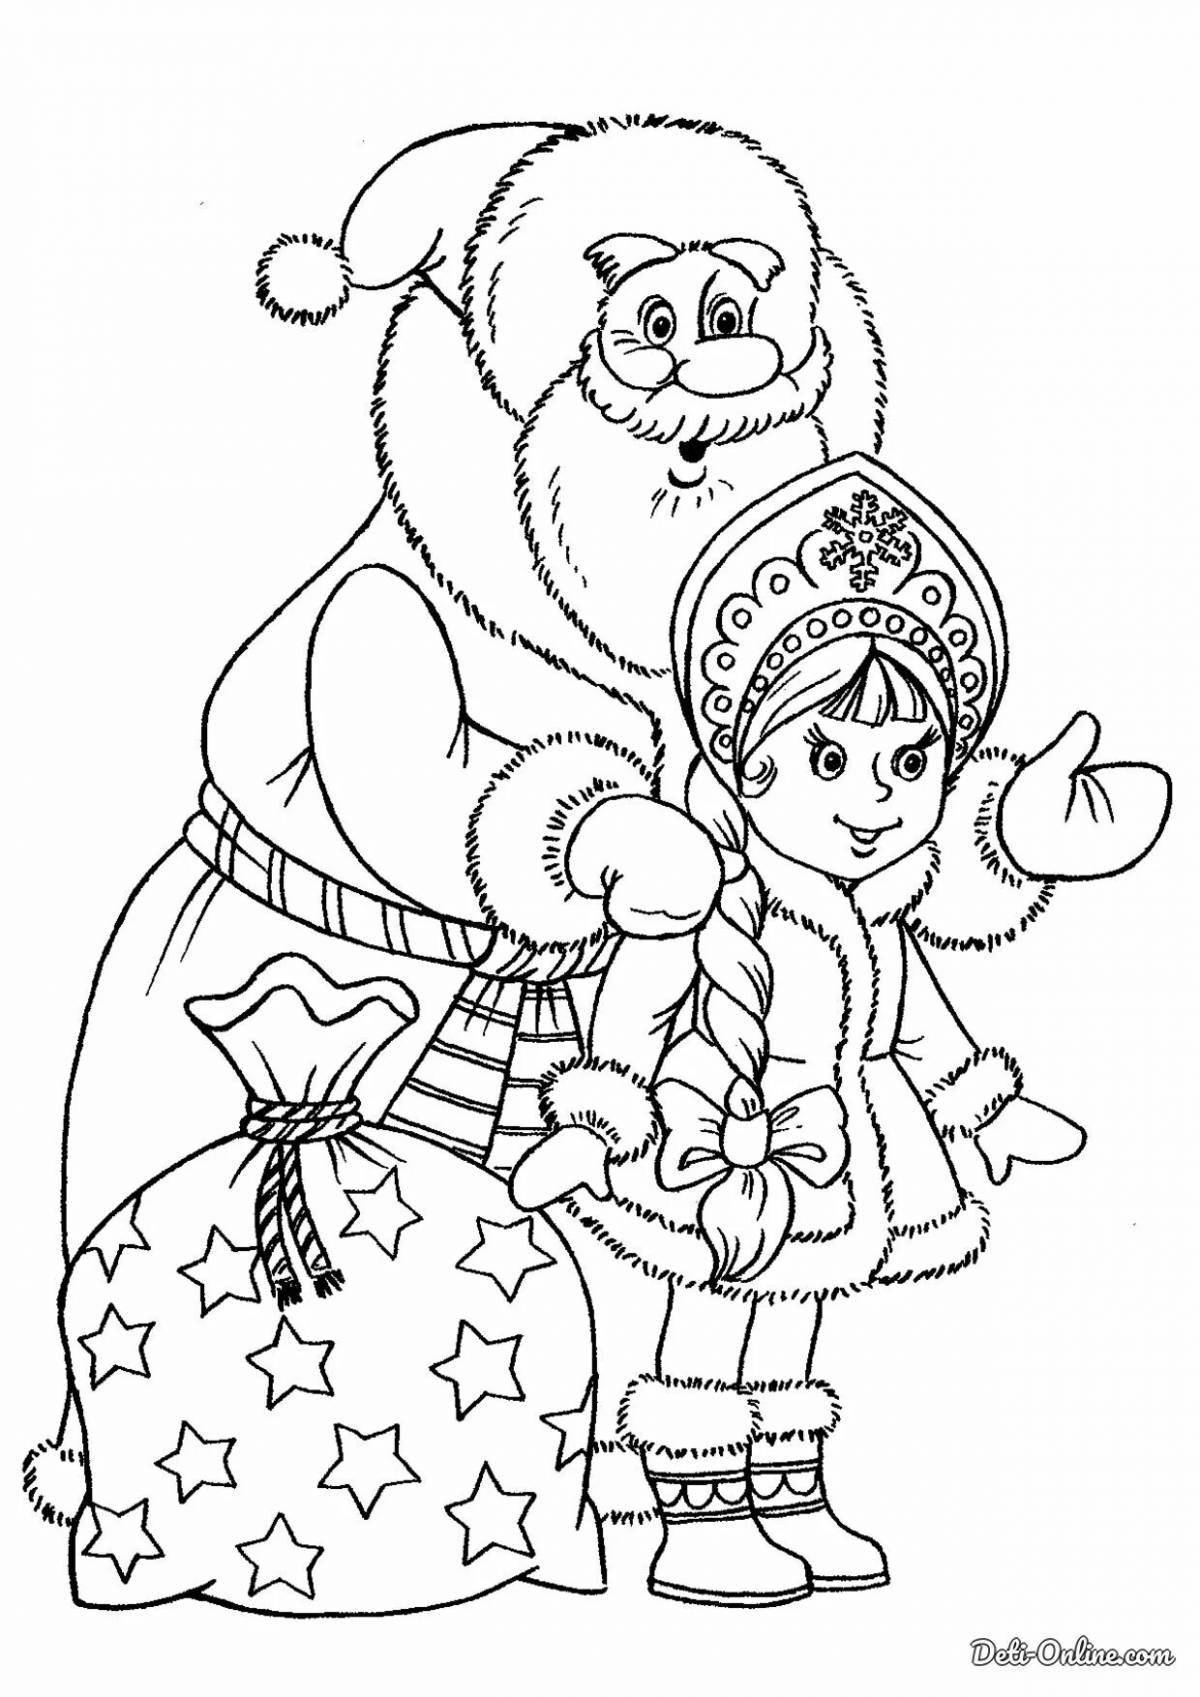 Joyful santa claus and snow maiden christmas coloring book